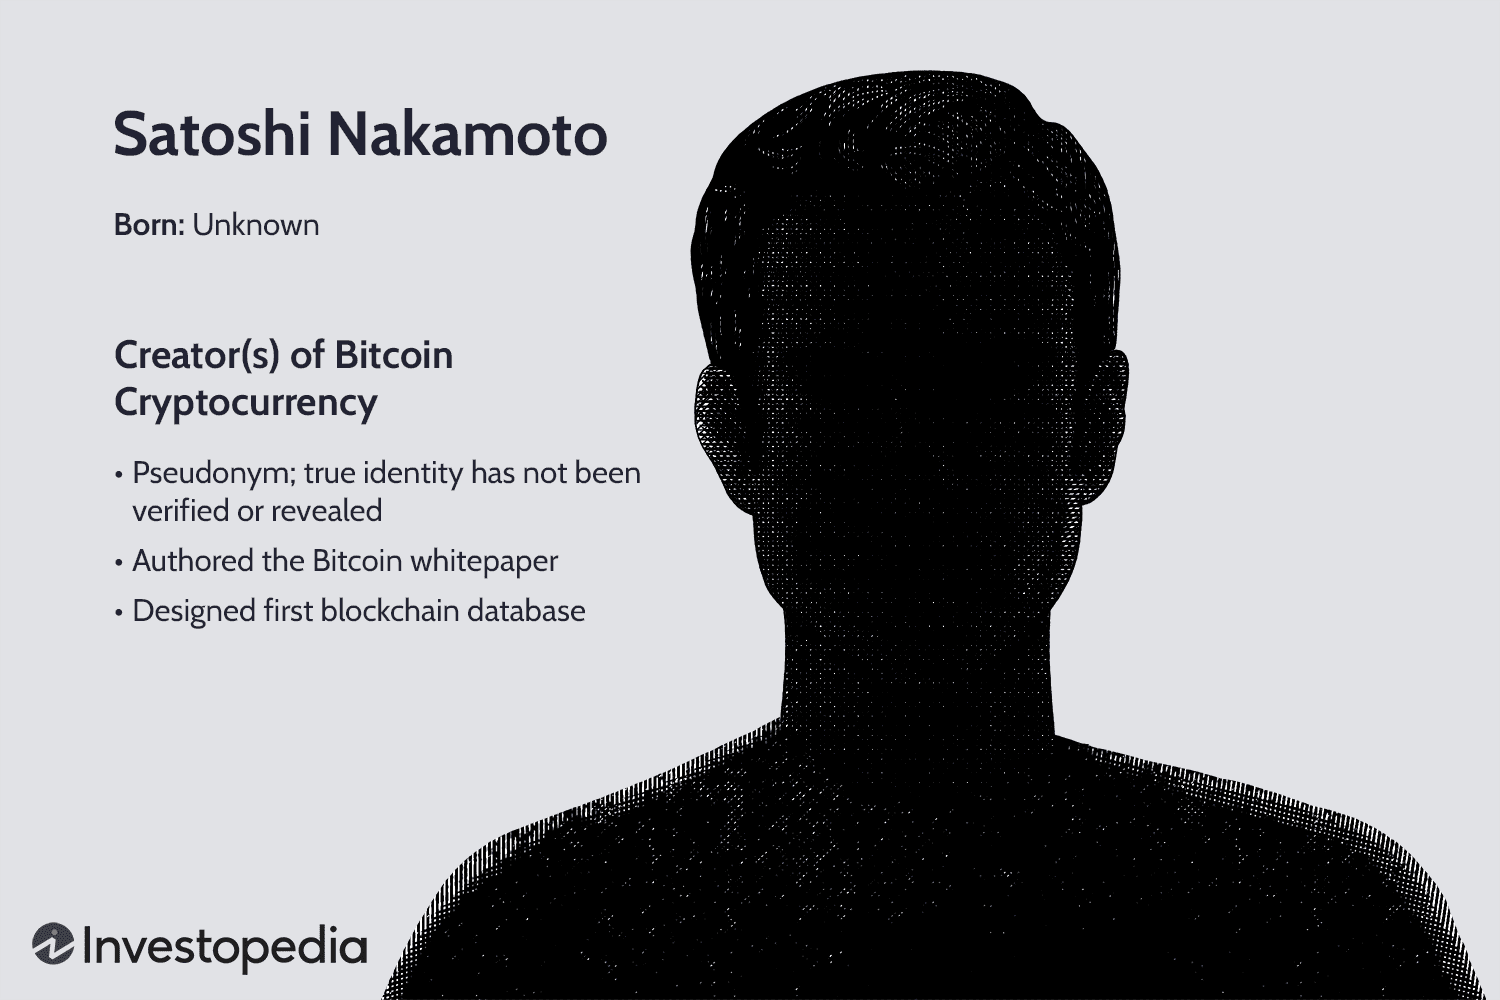 Bitcoin held by Coinbase rivals Satoshi Nakamoto’s in size - Blockworks